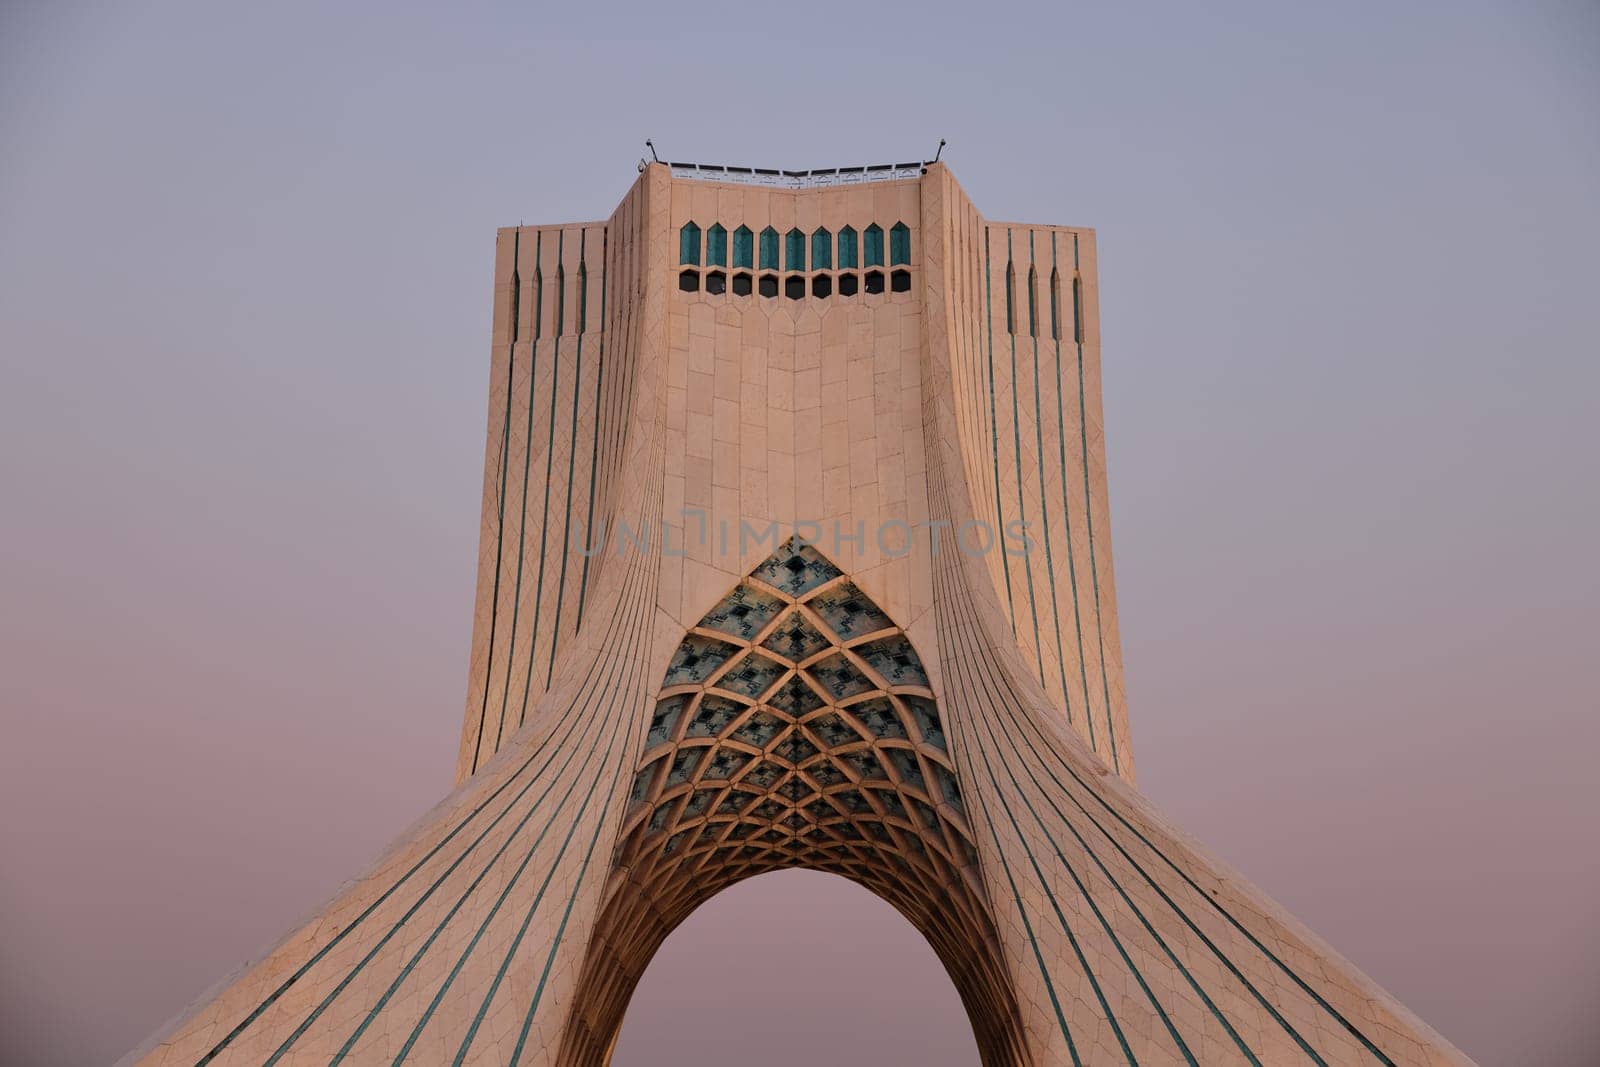 The Azadi Tower is a symbol of freedom in Iran, the main symbol of Iran's capital. MS ZI LA Azadi Tower - Freedom Tower, the gateway to Tehran, Popular tourist point at twilight. 02.12.22 Tehran, Iran by EvgeniyQW